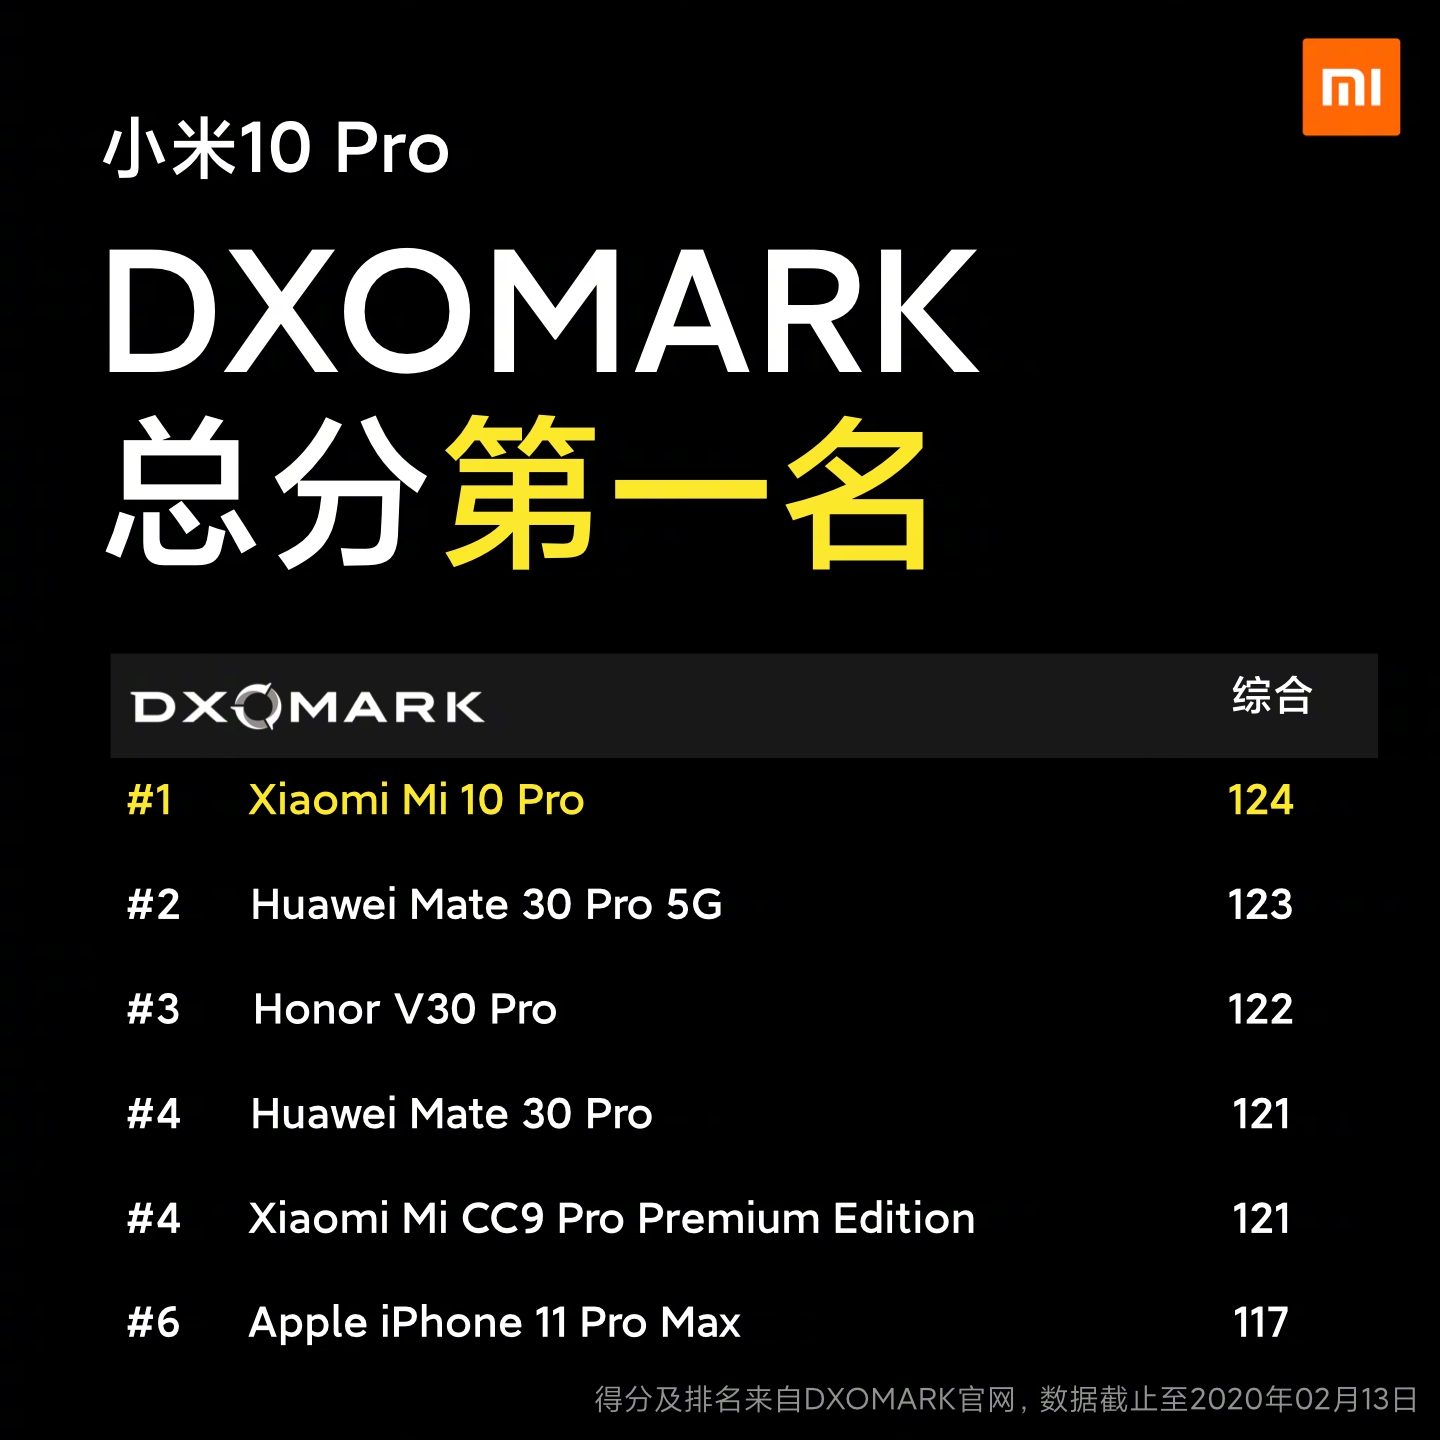 Xiaomi Mi 10 Pro лидер DXomark